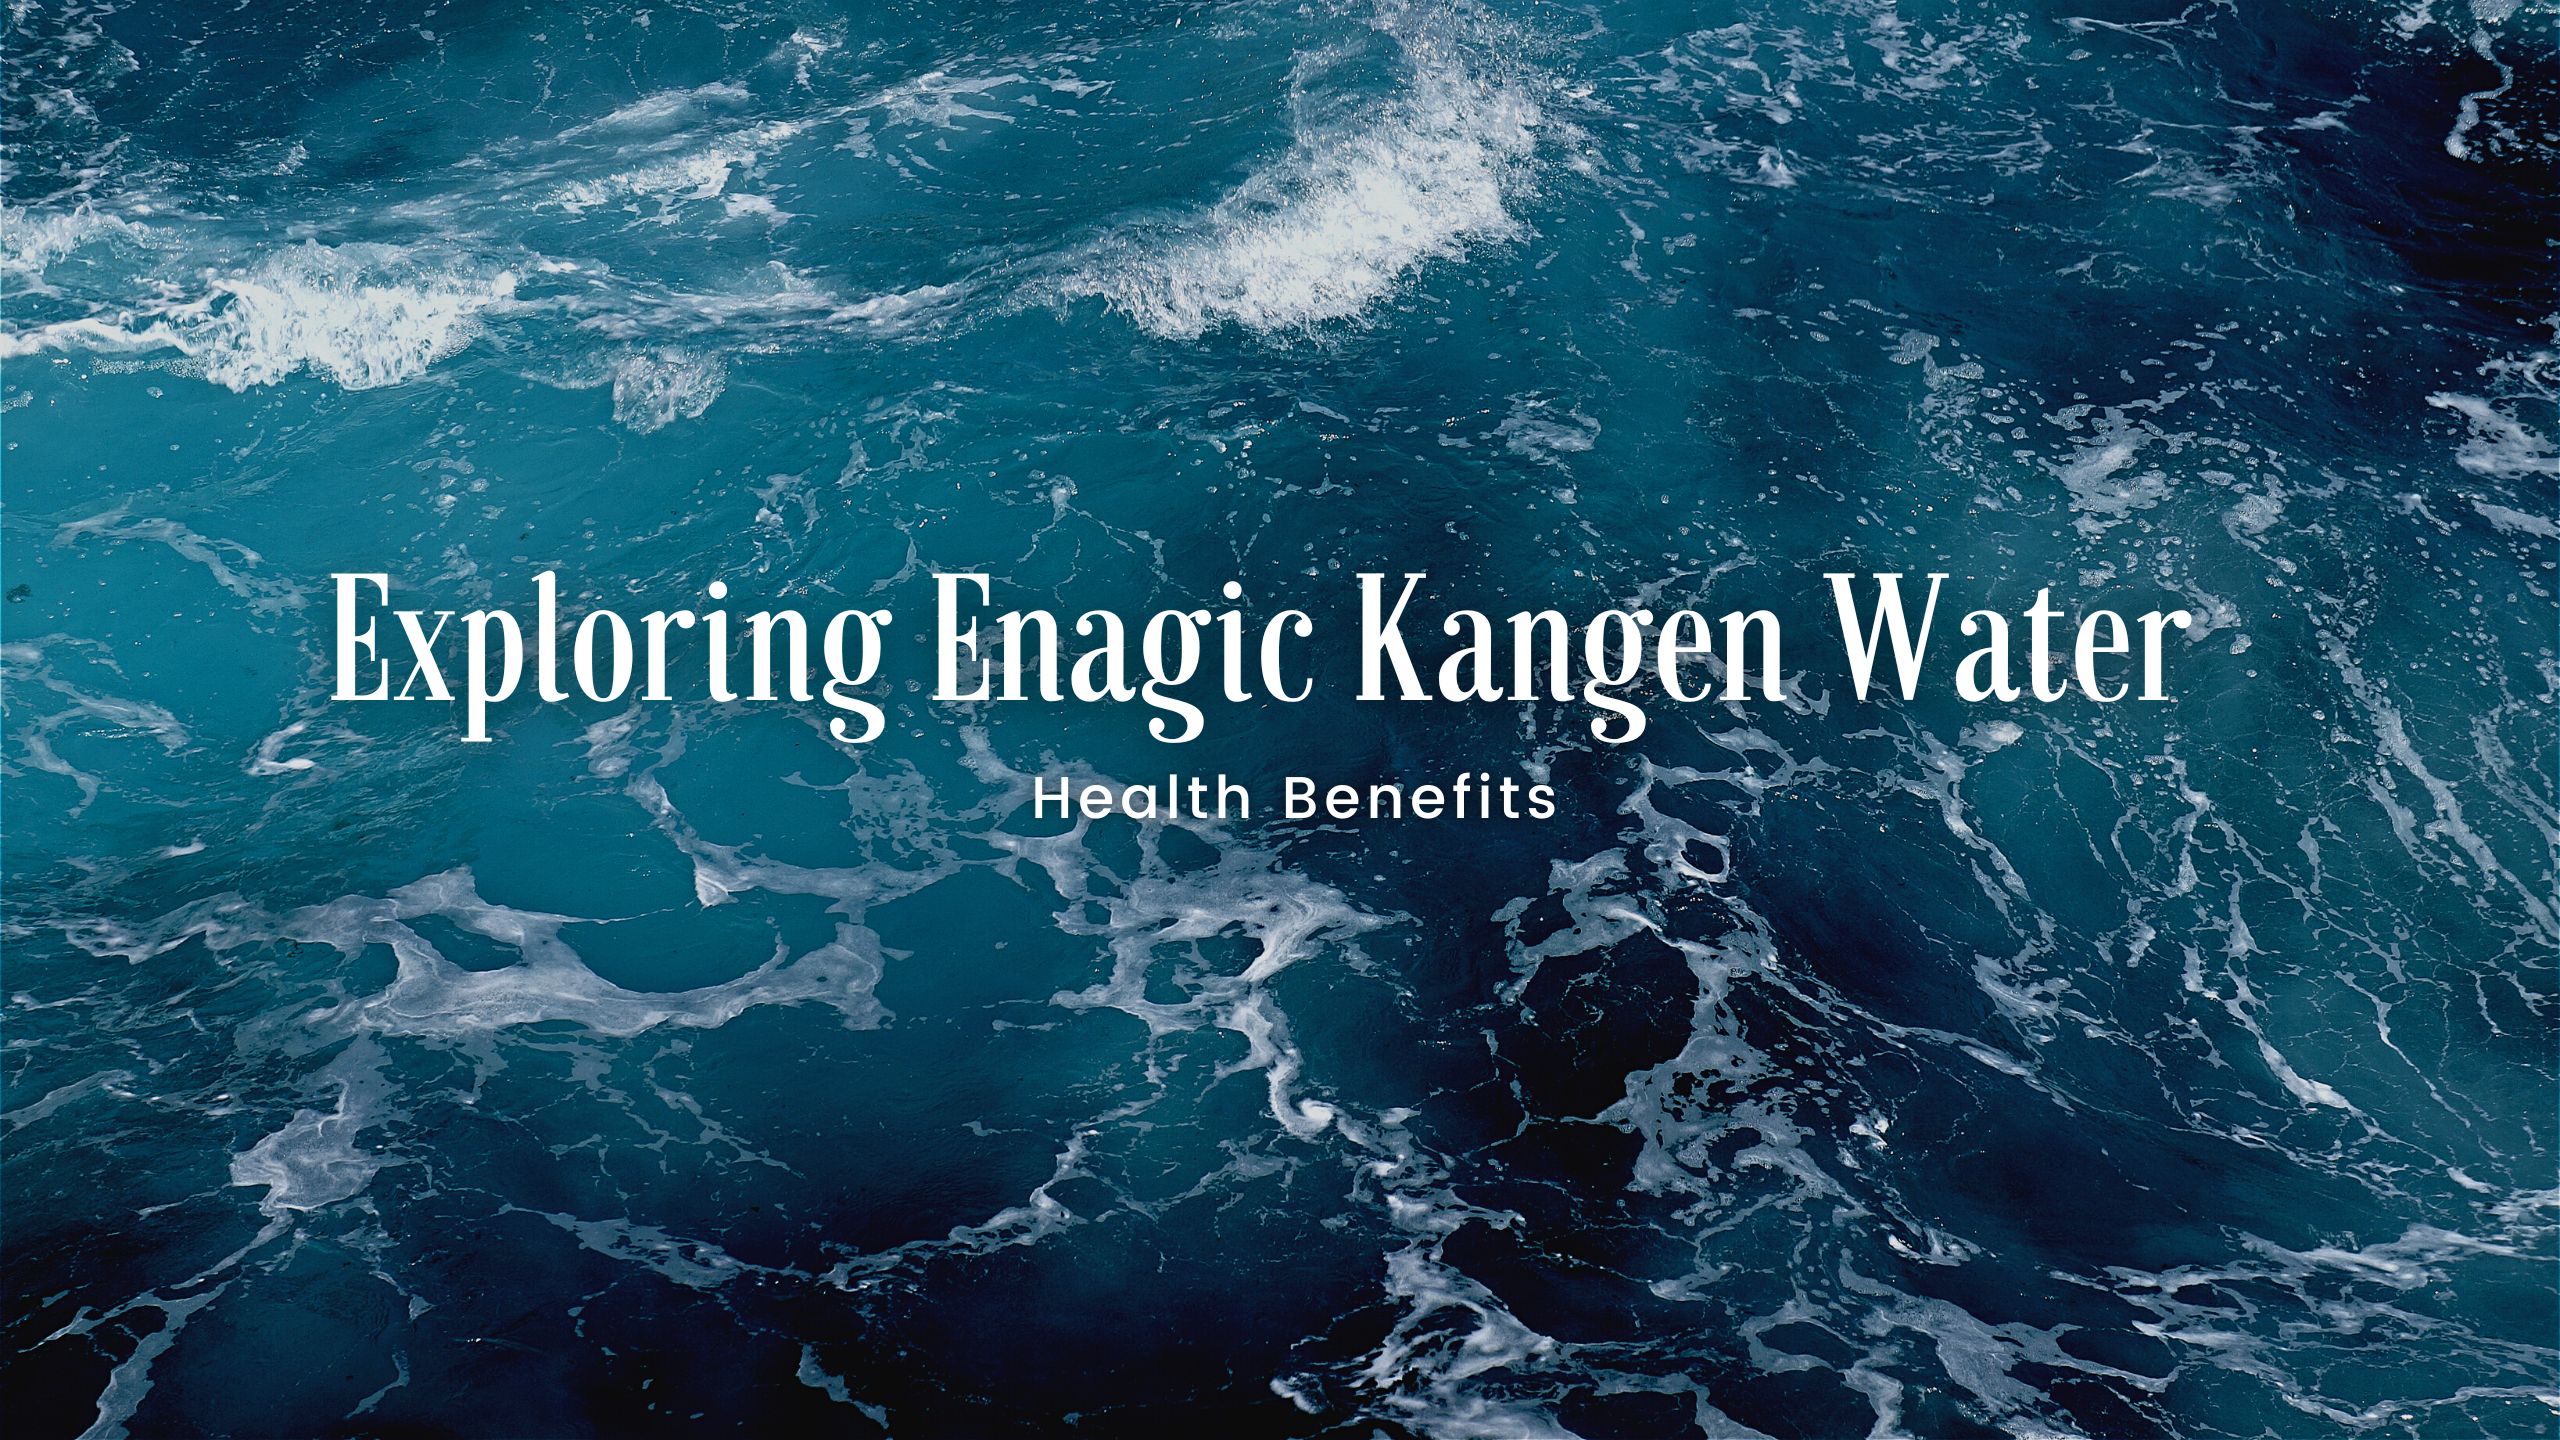 enagic kangen water health benefits